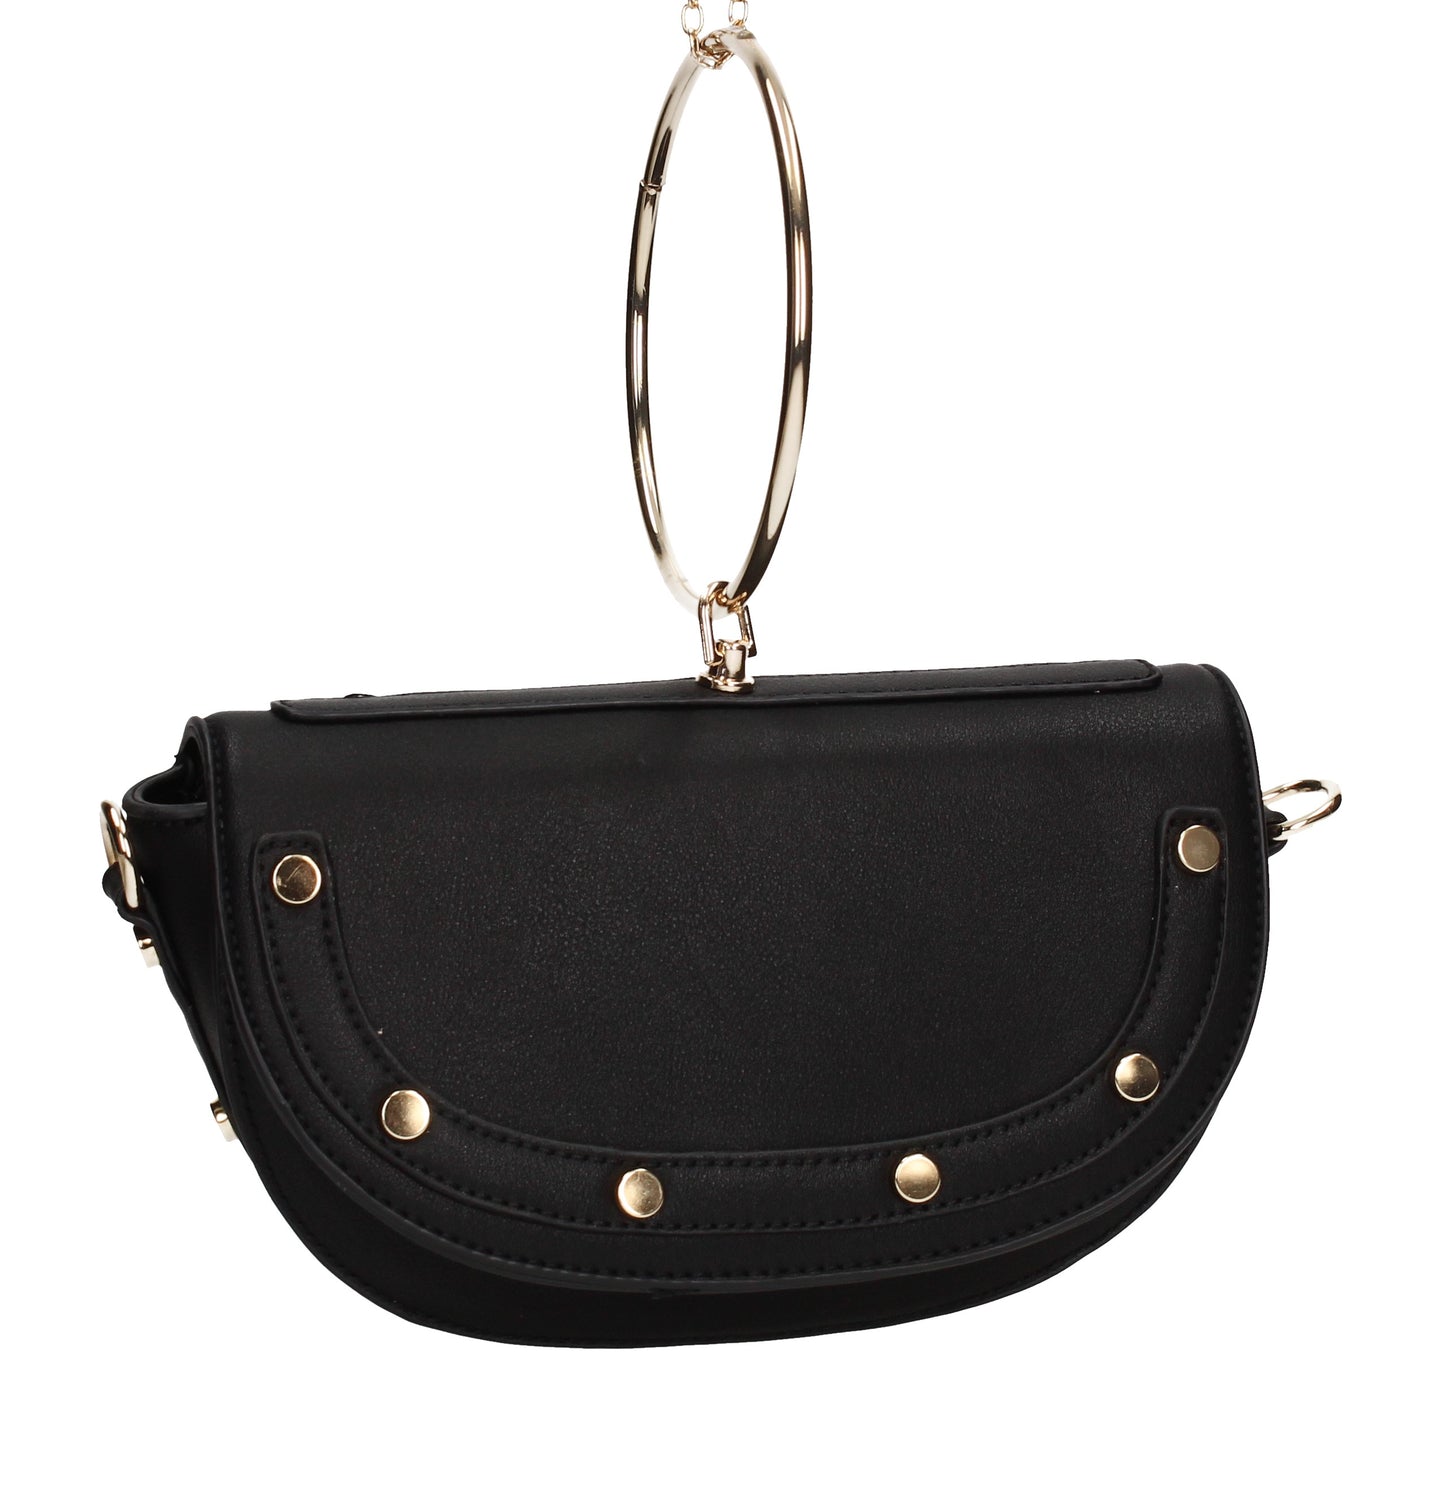 SWANKYSWANS Lulu Ring Handle Clutch Bag Black Cute Cheap Clutch Bag For Weddings School and Work